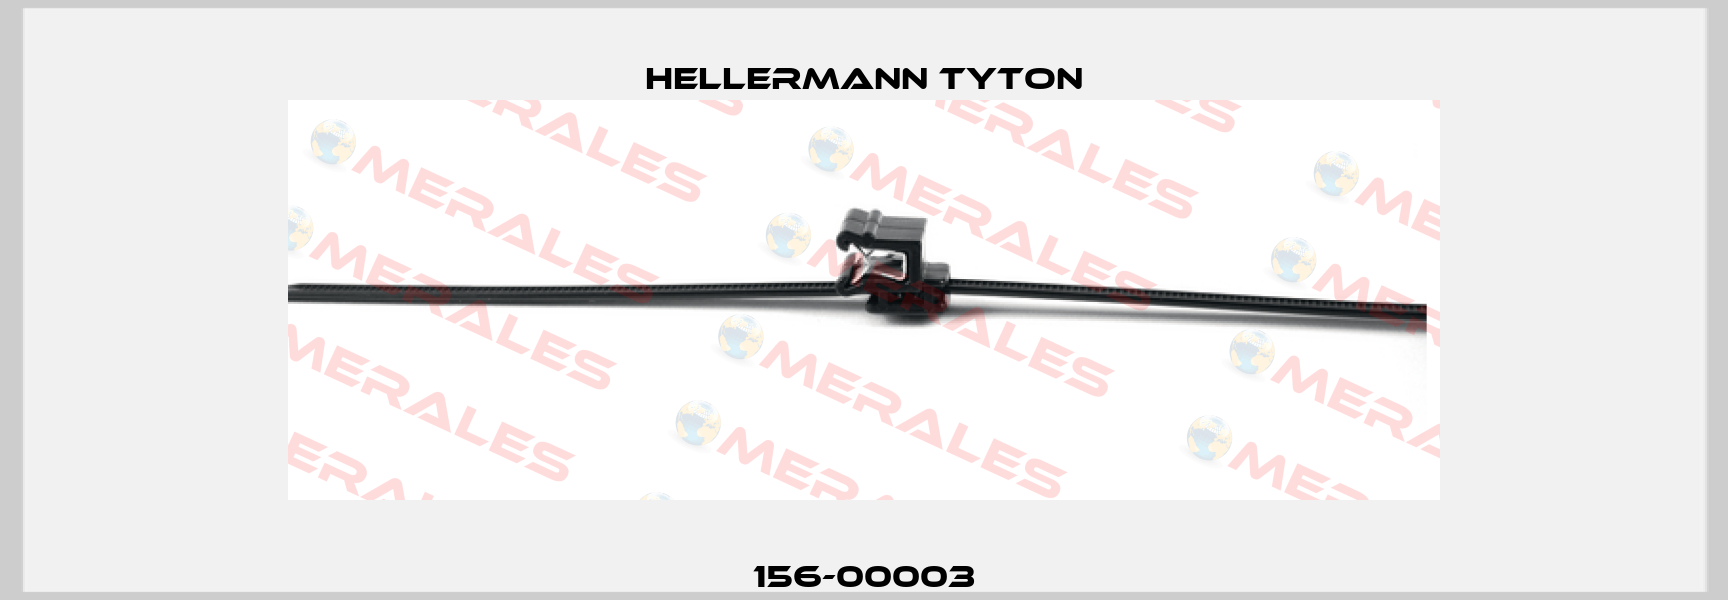 156-00003 Hellermann Tyton